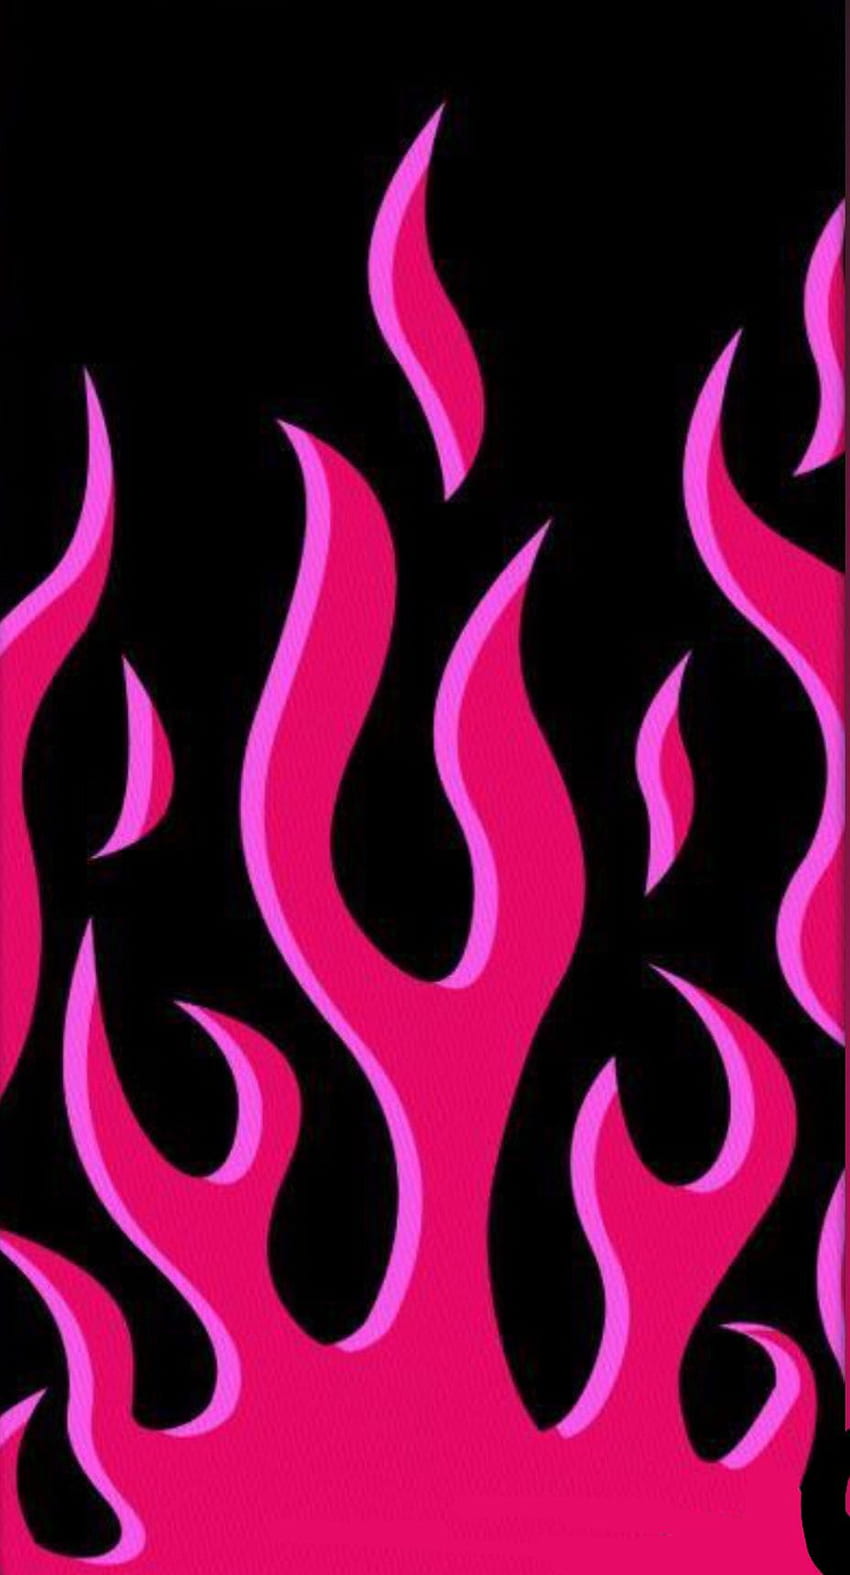 api merah muda. Edgy , Iconic , Iphone estetis, Pink Fire wallpaper ponsel HD